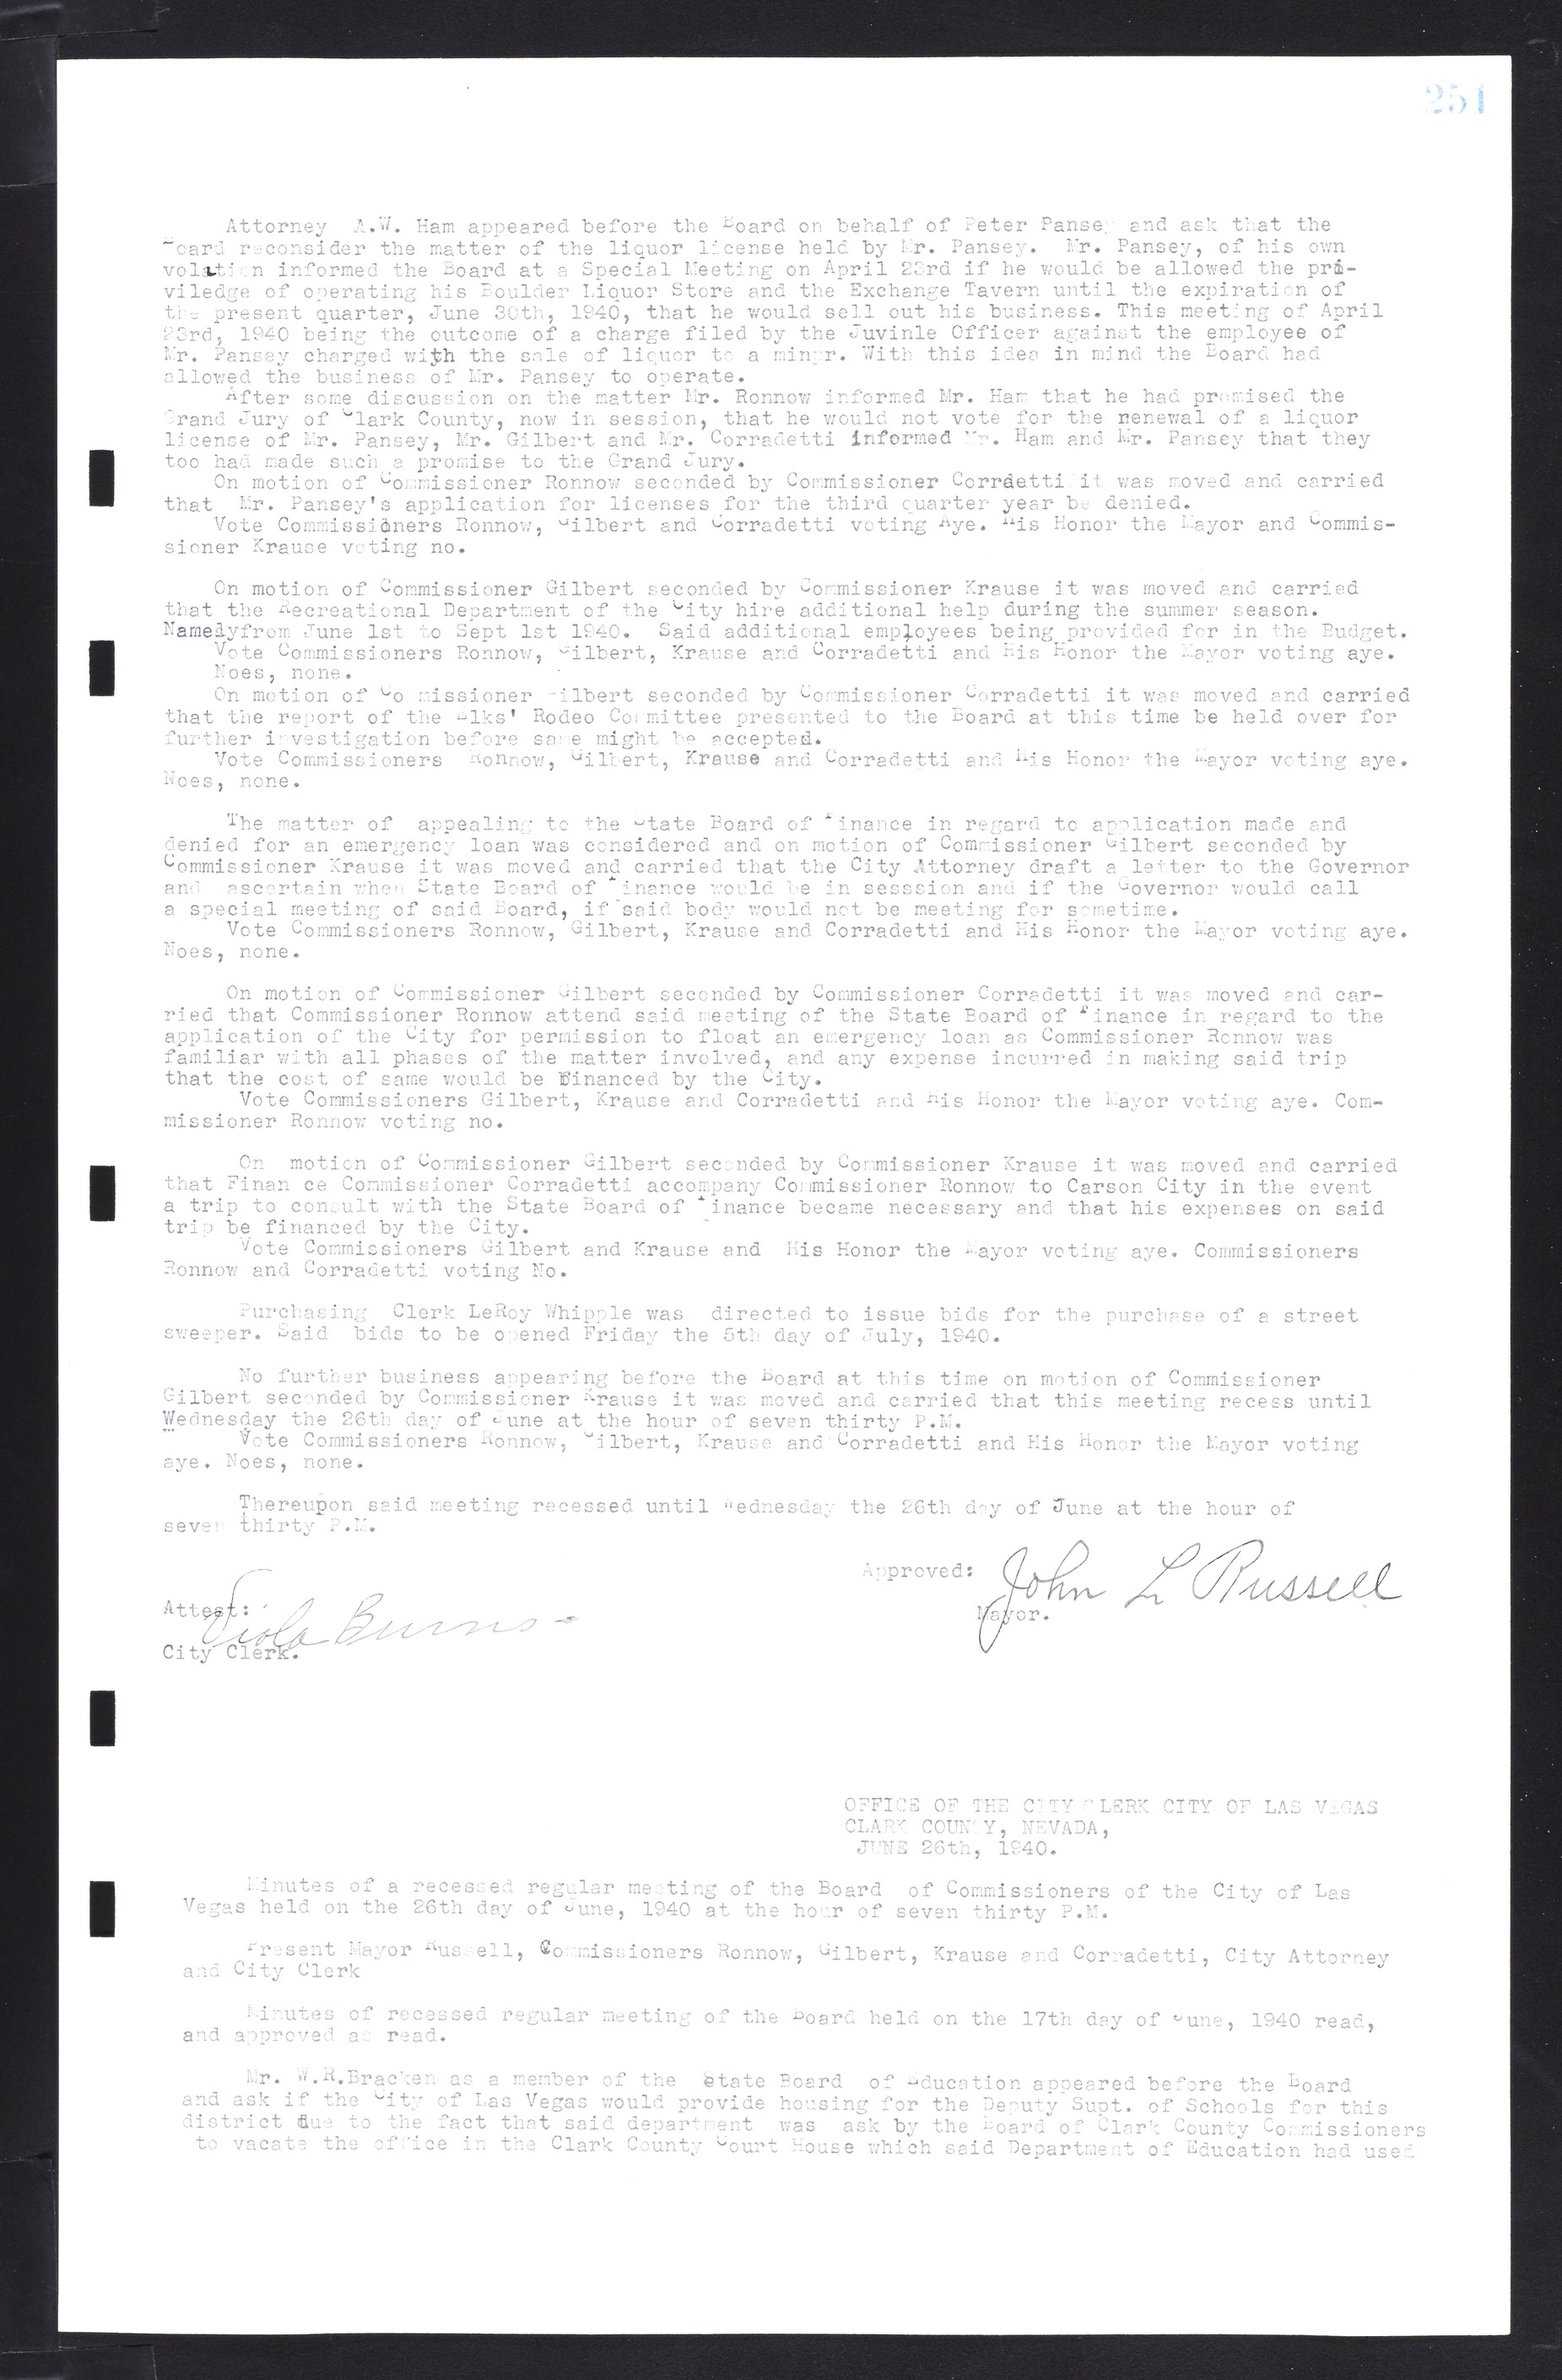 Las Vegas City Commission Minutes, February 17, 1937 to August 4, 1942, lvc000004-271